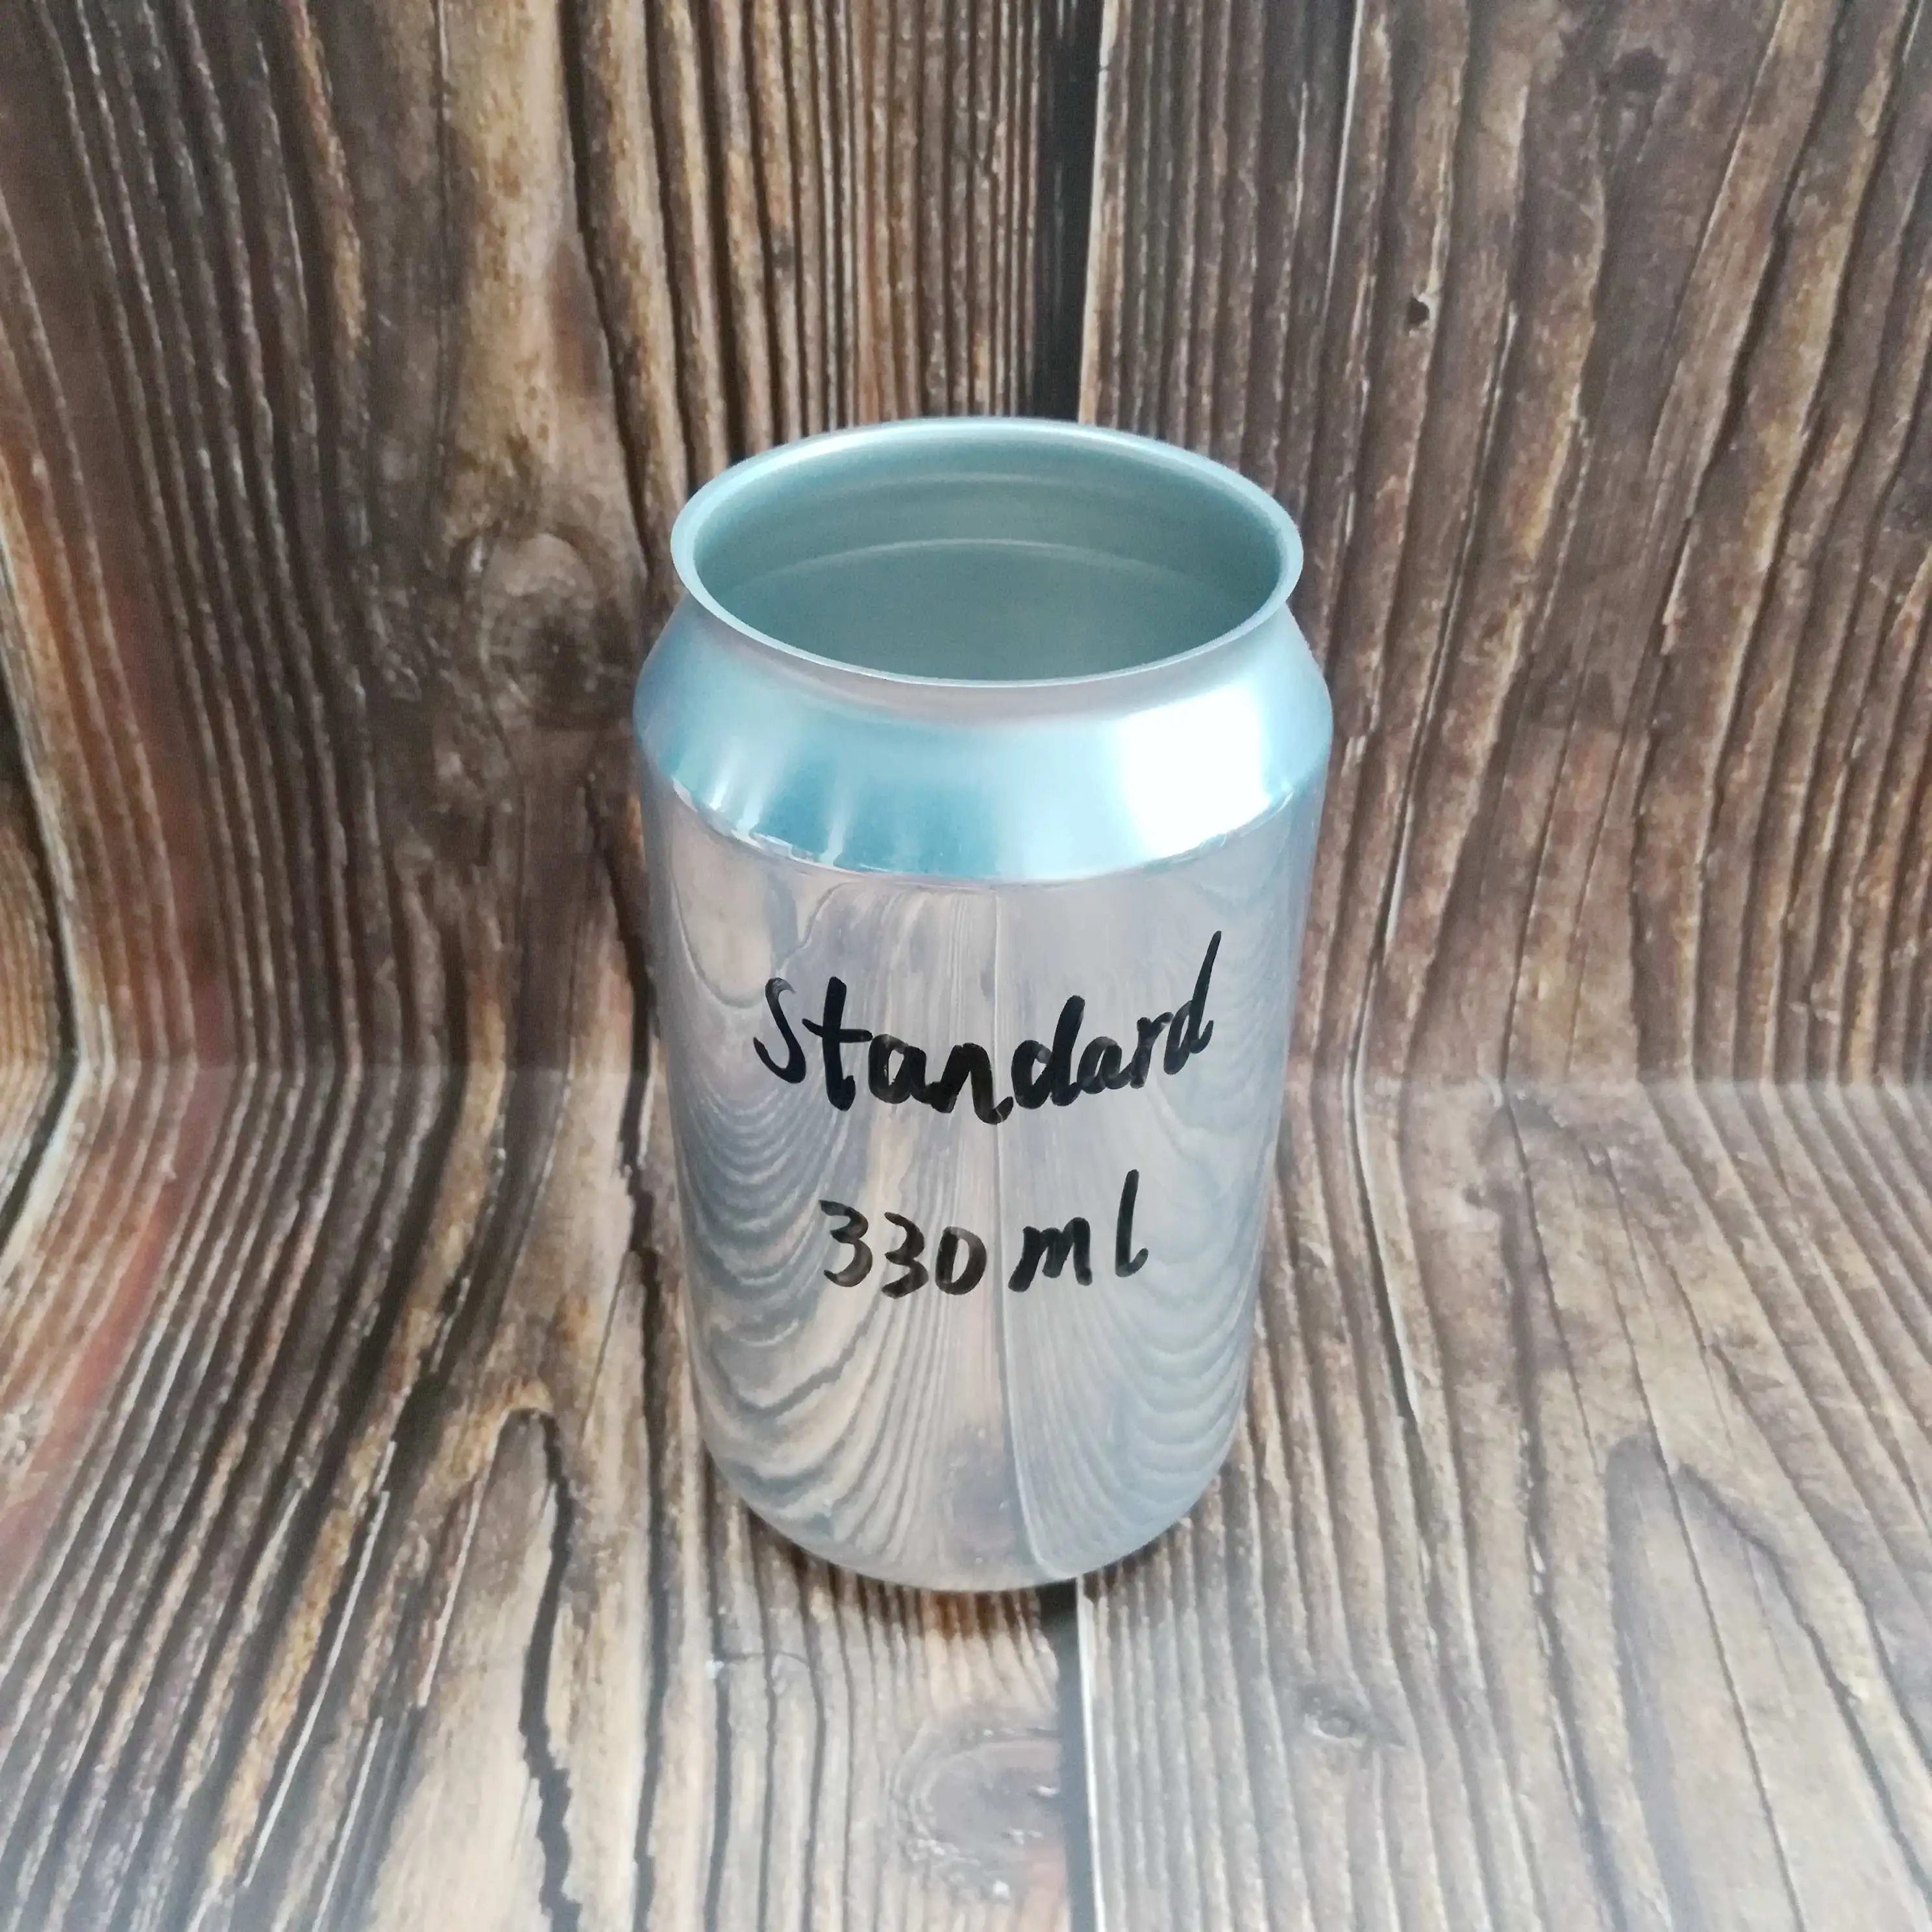 product-Trano-Wholesale food grade empty customized aluminiumbeverage and beer can sleek 330ml 330ml-1